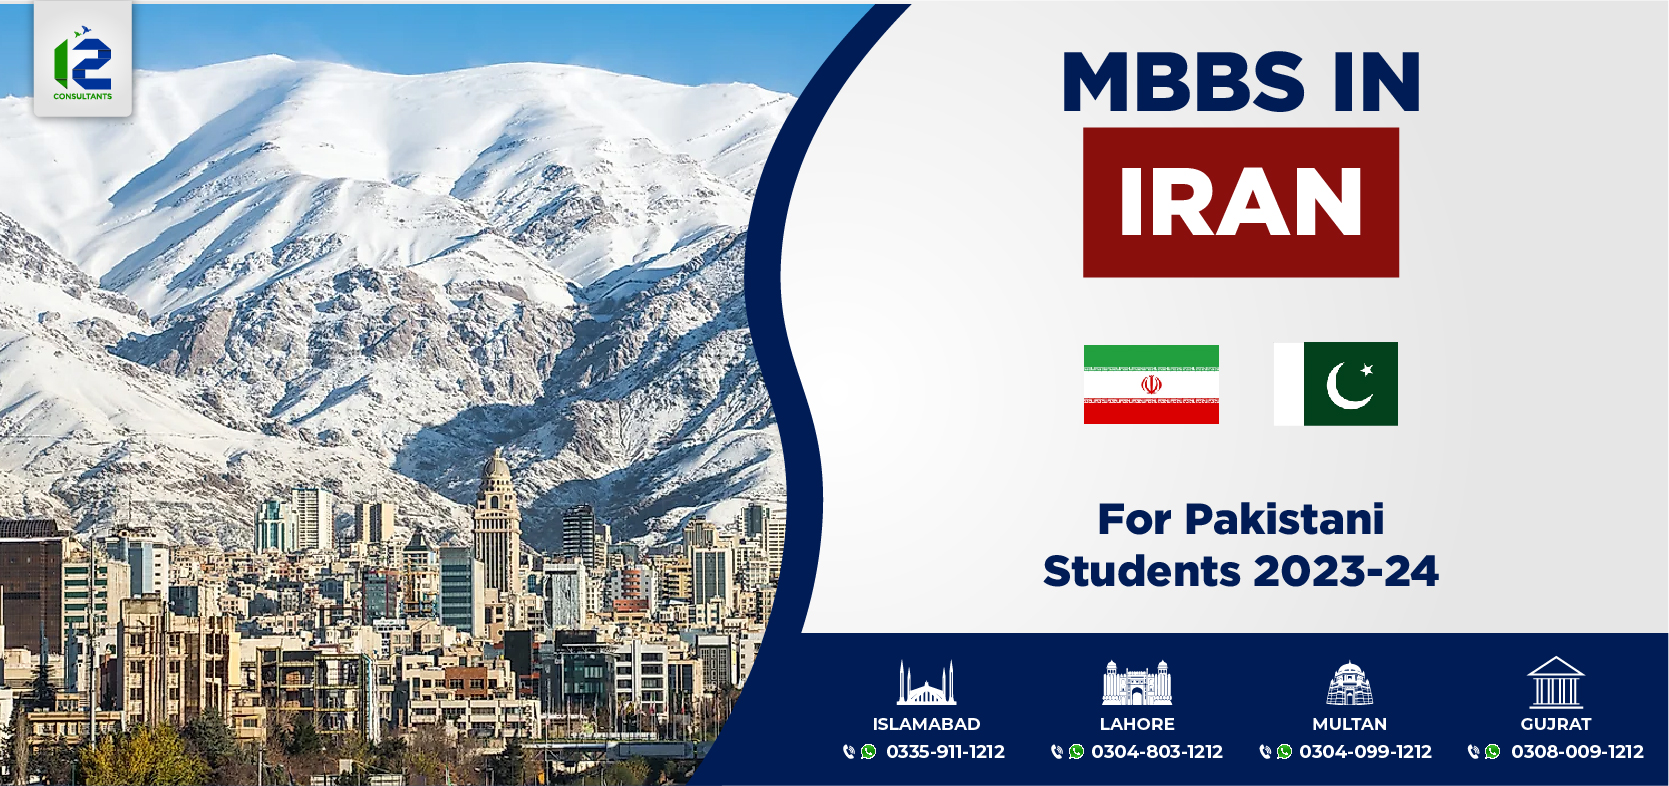 Study MBBS in IRAN from Pakistan